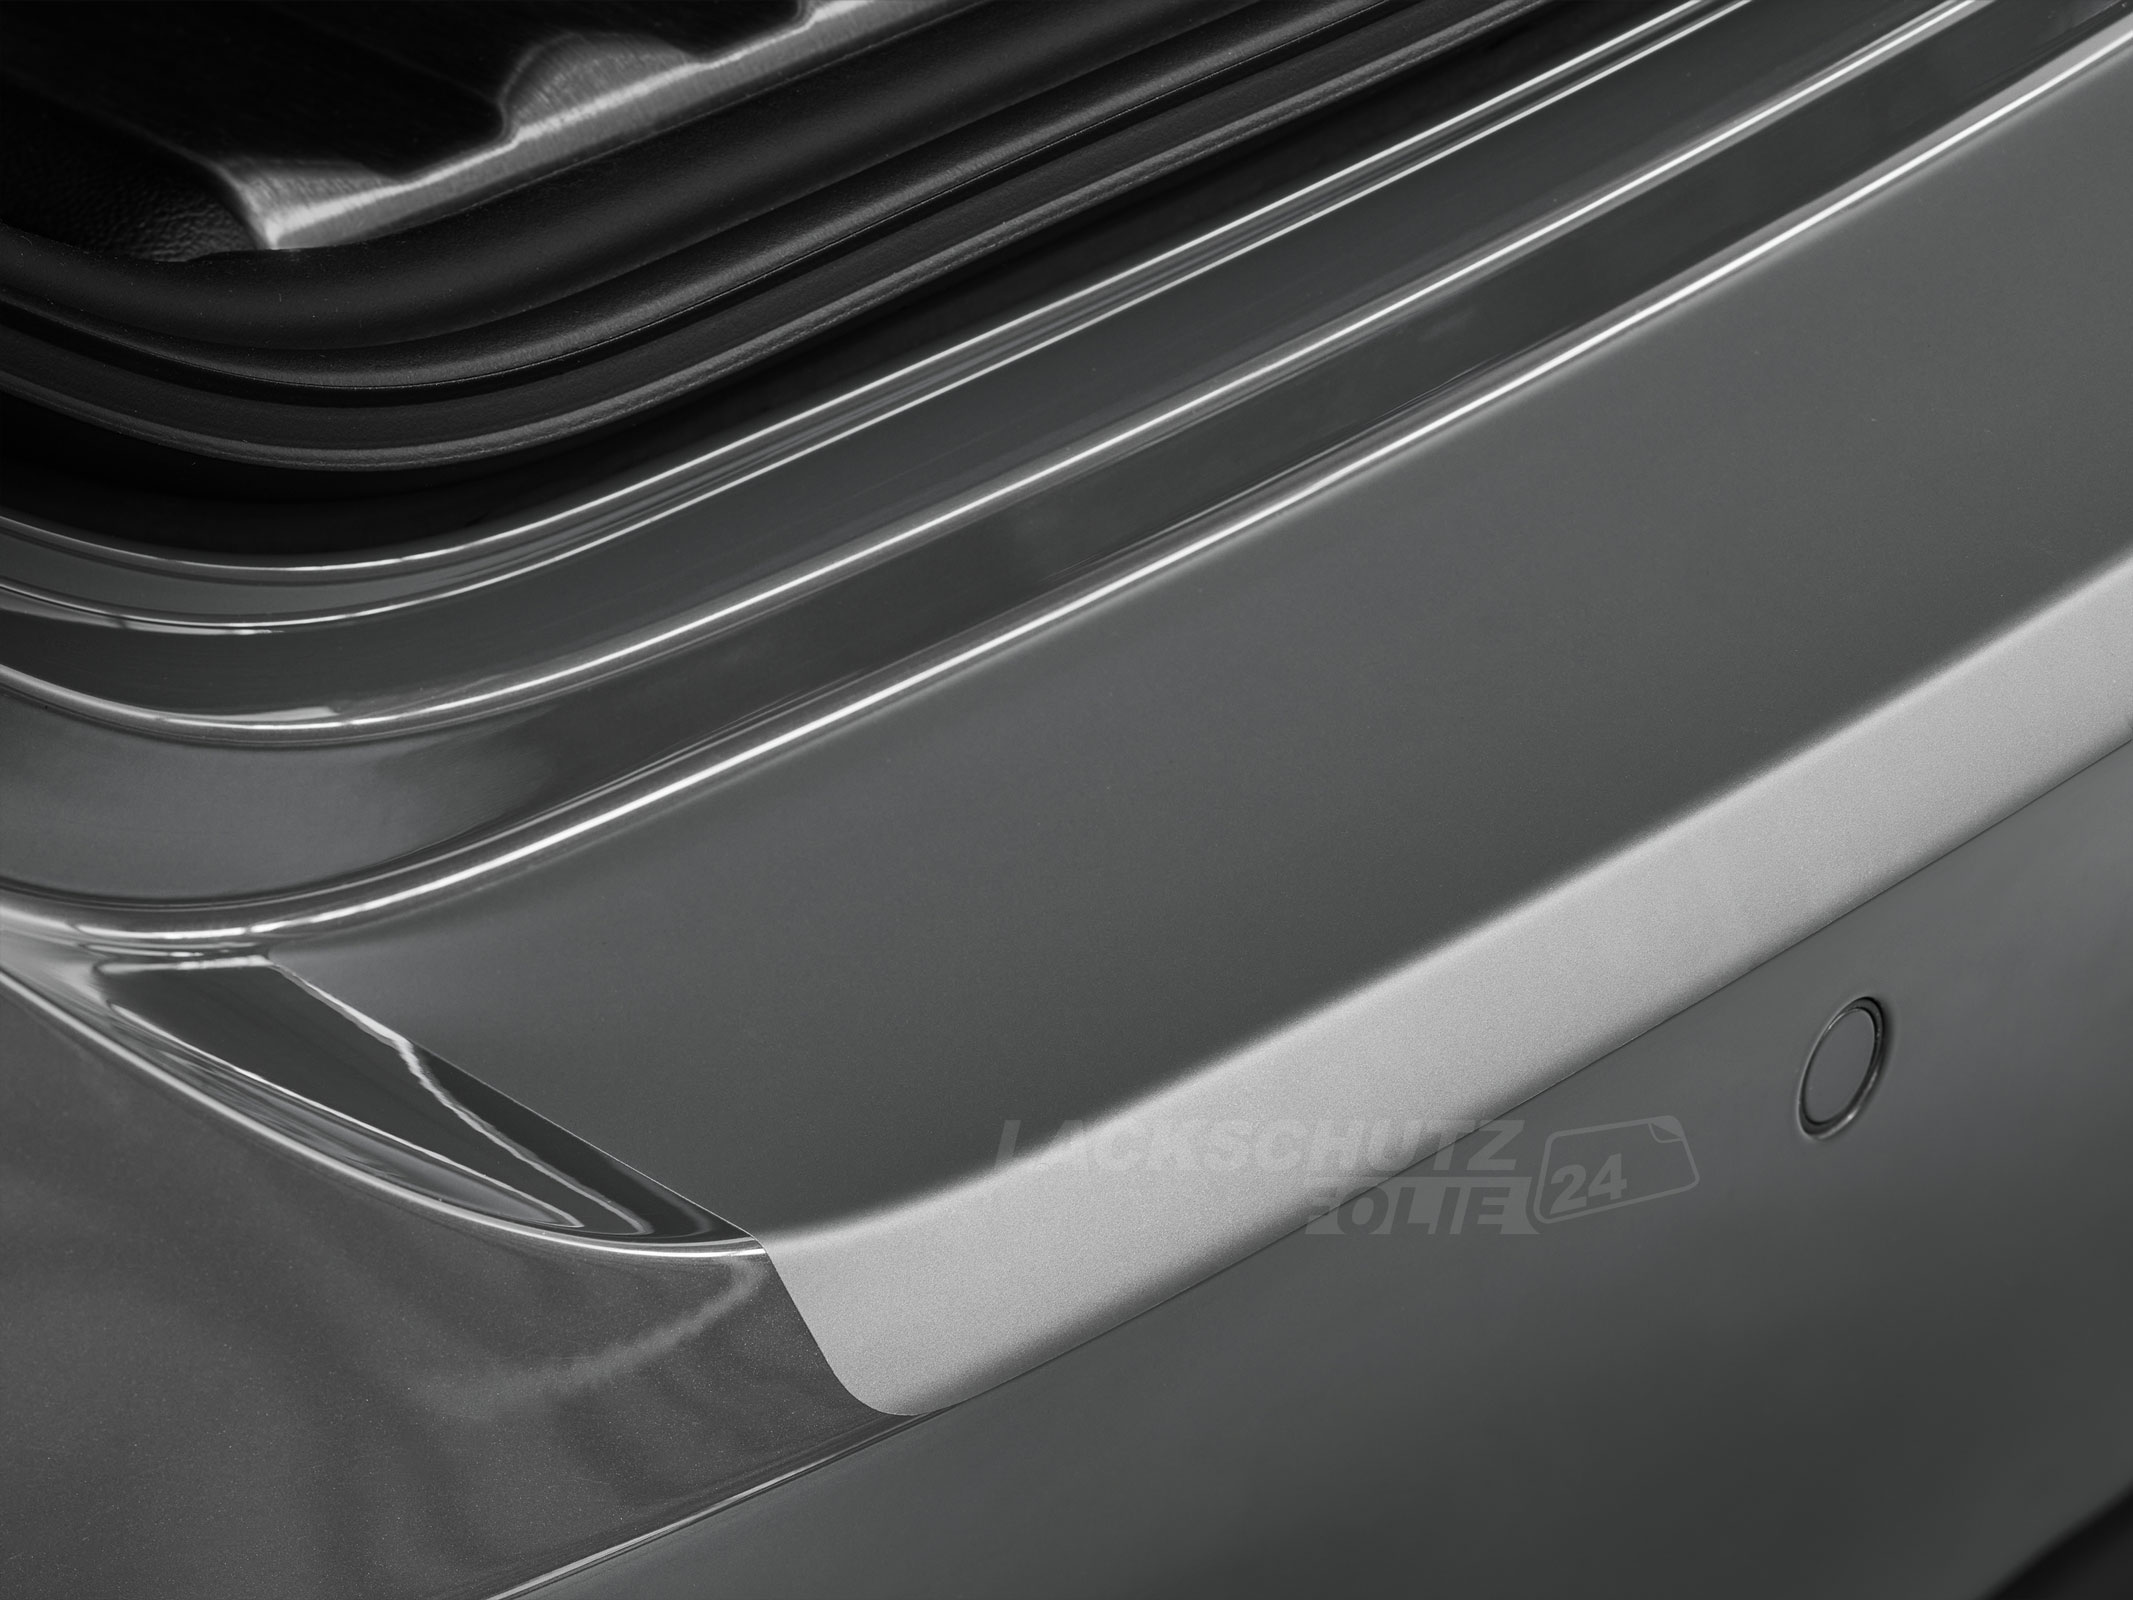 Ladekantenschutzfolie - Transparent Glatt MATT 110 µm stark  für Audi Q3 Typ 8U, BJ 11/2011-08/2018